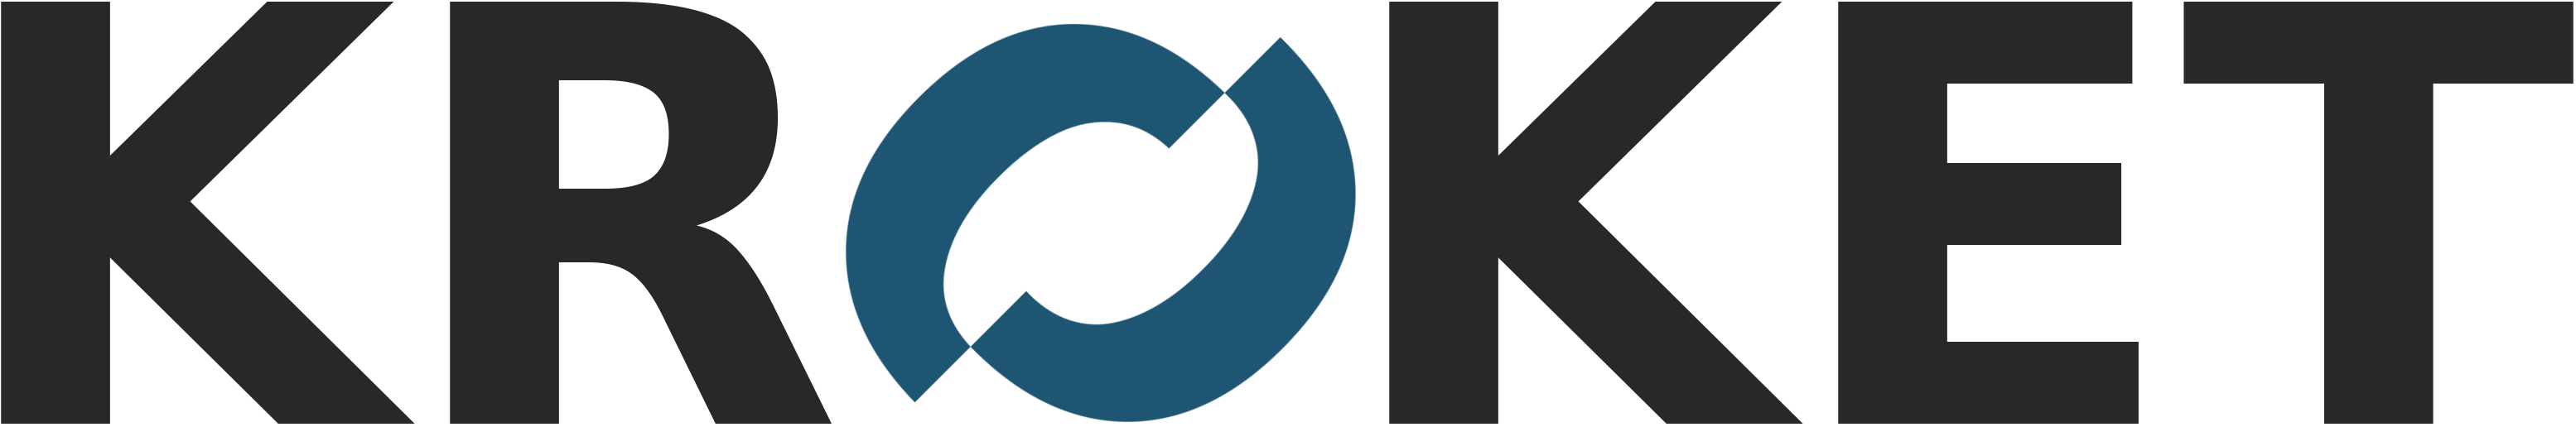 Kroket Logo